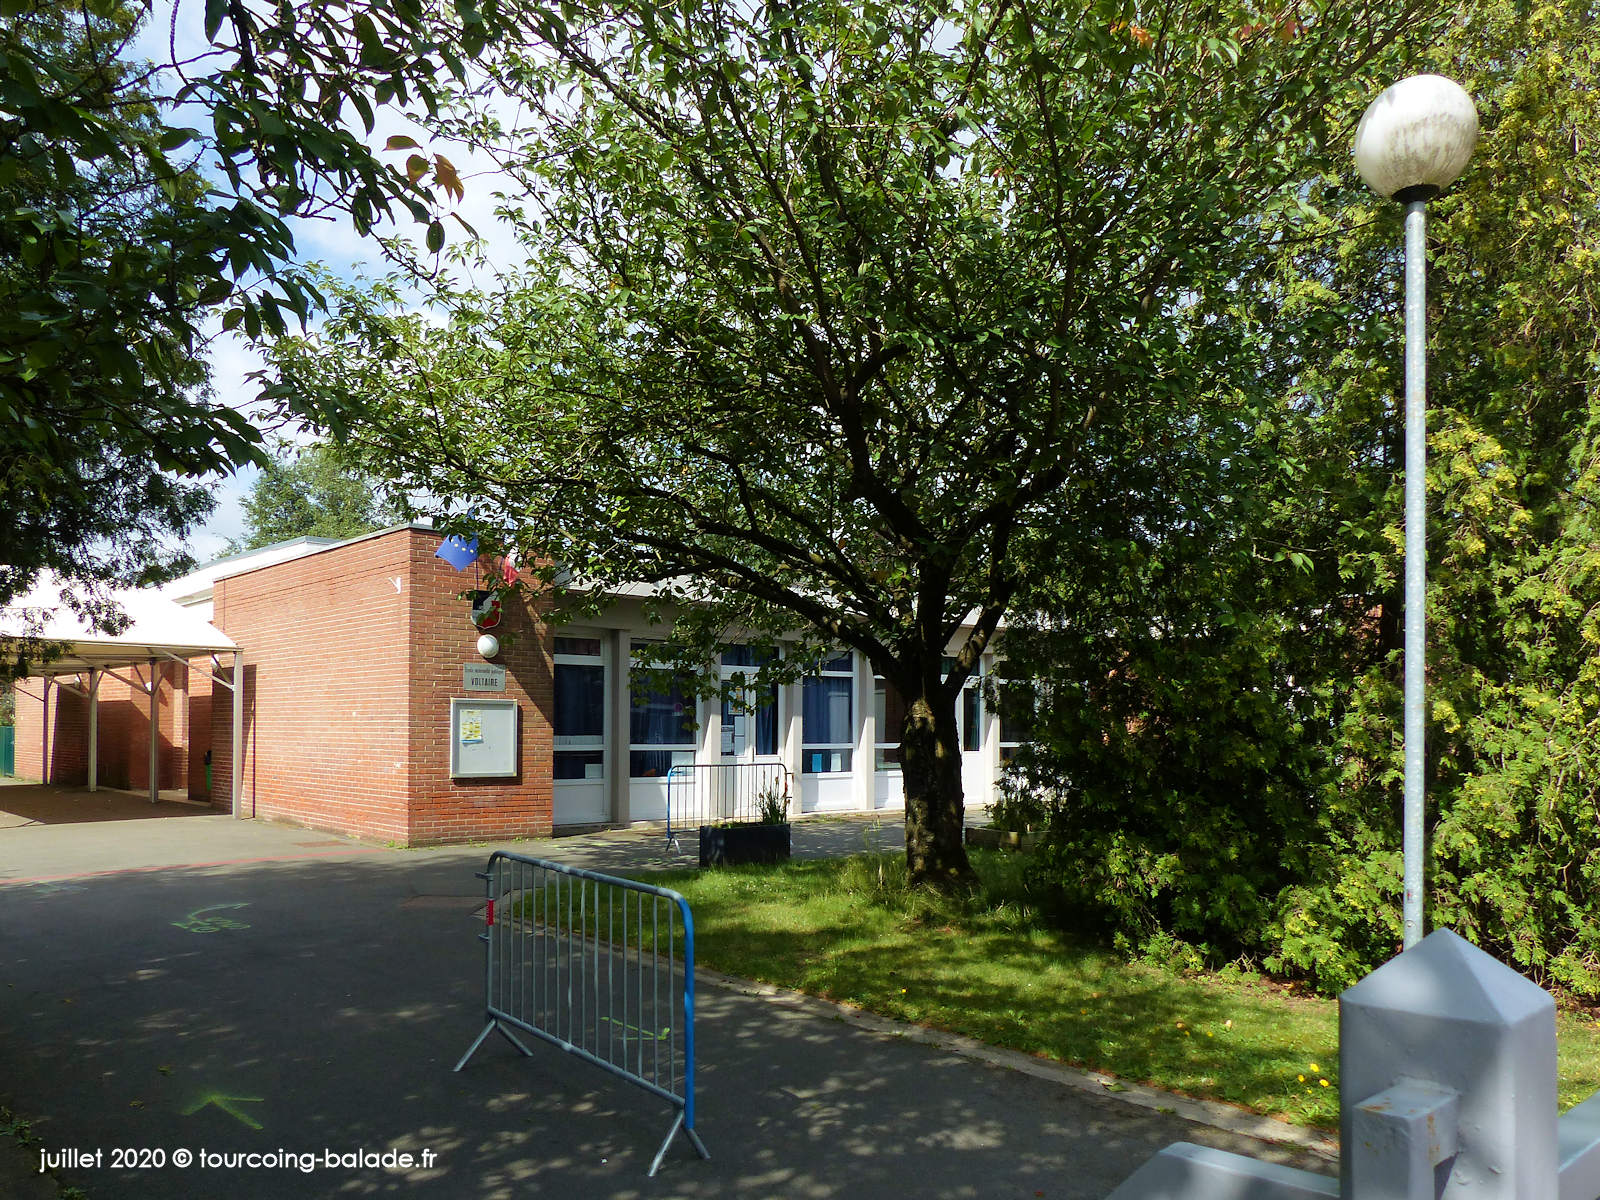 École Maternelle Voltaire, Tourcoing 2020